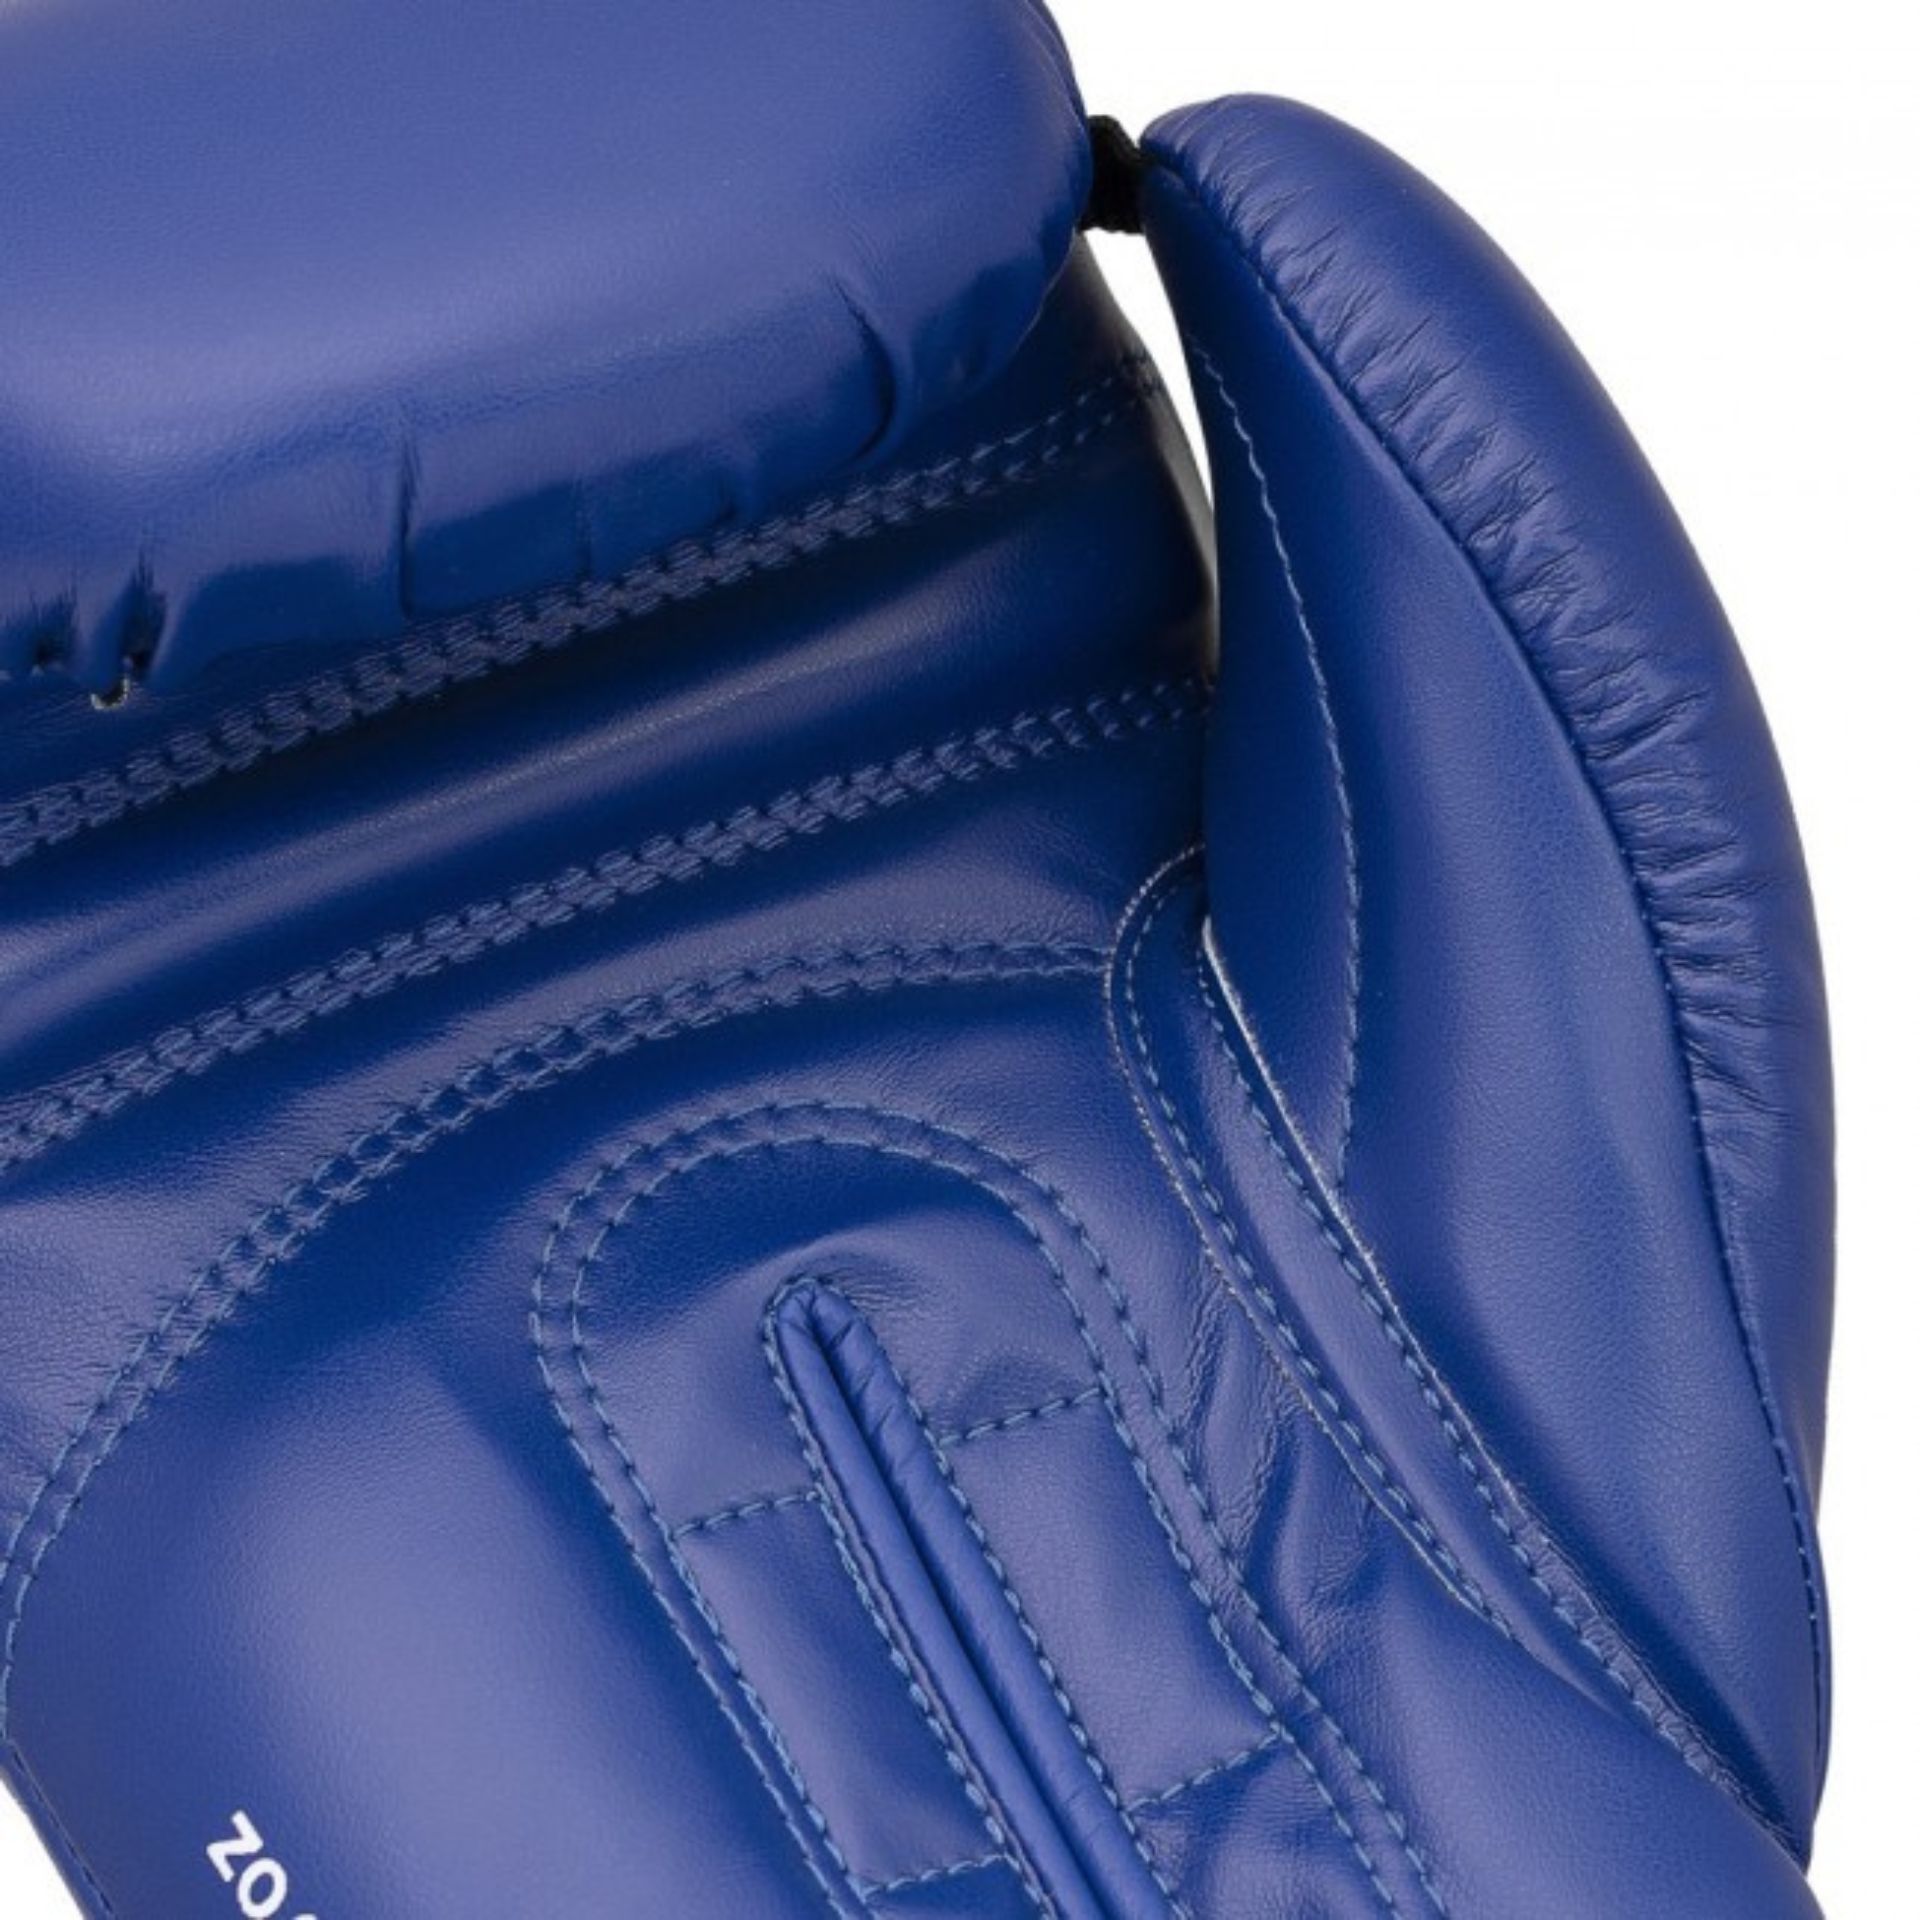 adidas Velcro IBA Boxhandschuhe - 10 Oz - blau